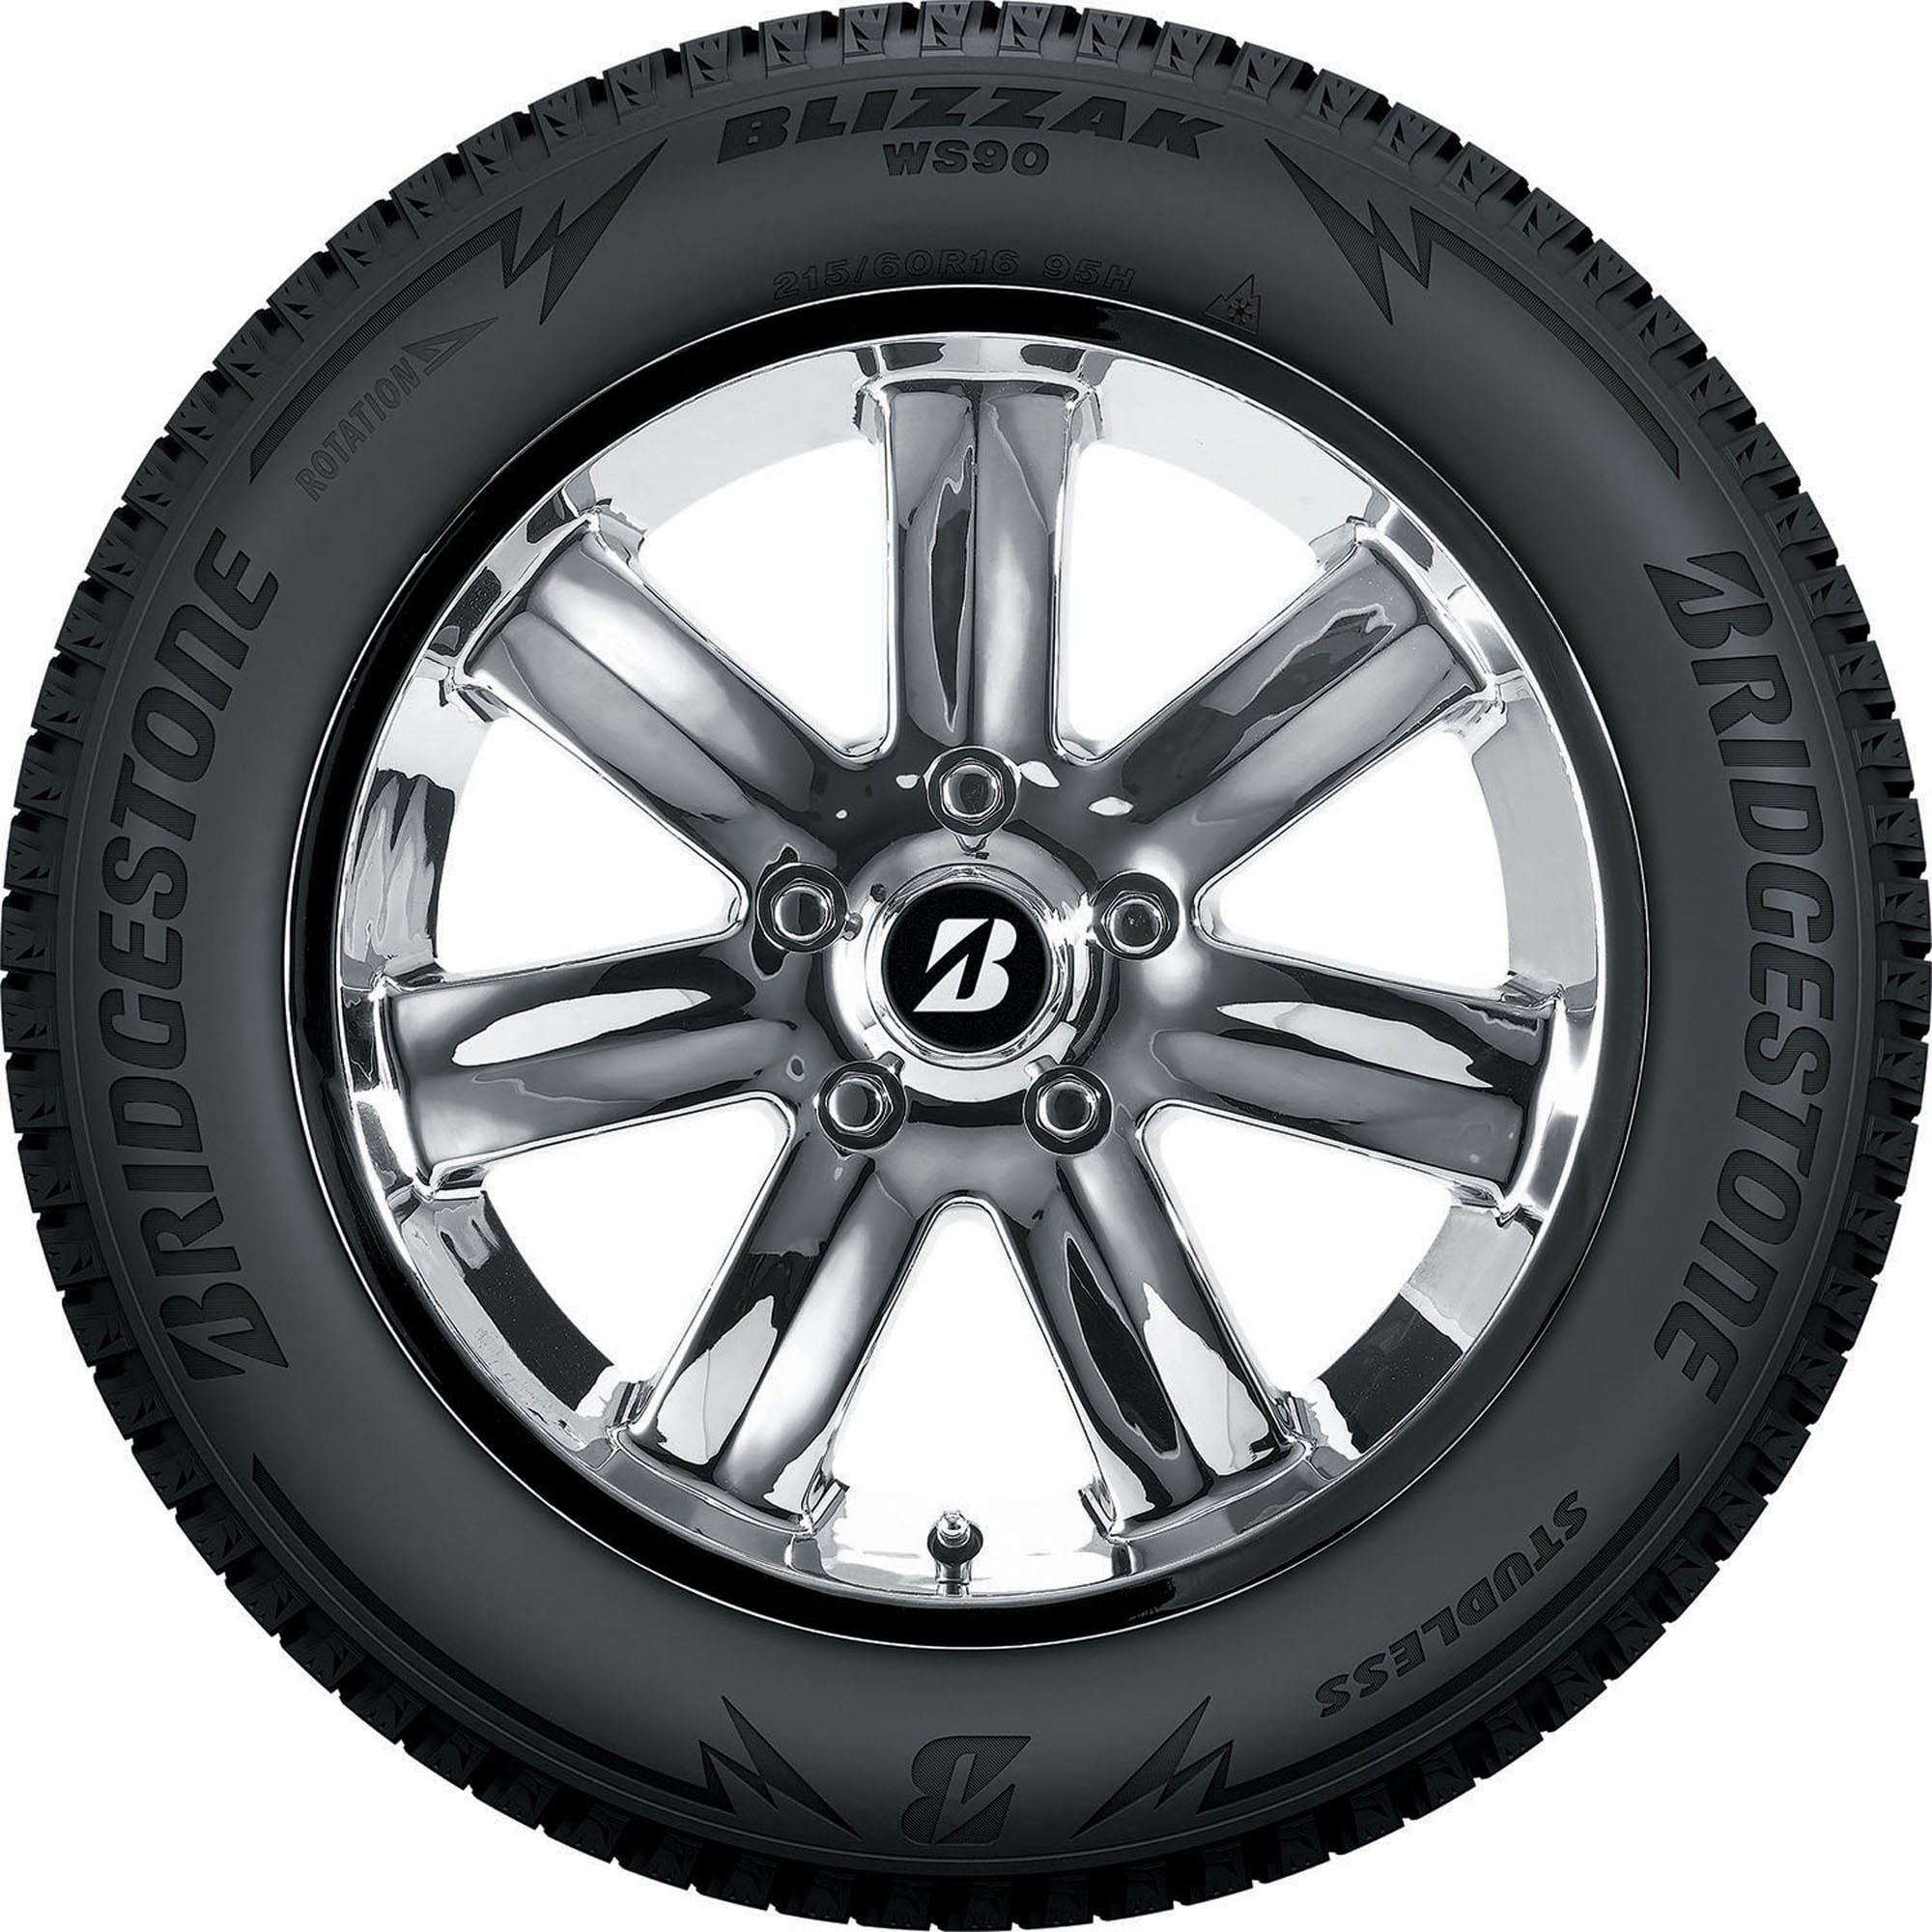 Bridgestone Blizzak WS90 Winter 215/60R16 95H Passenger Tire